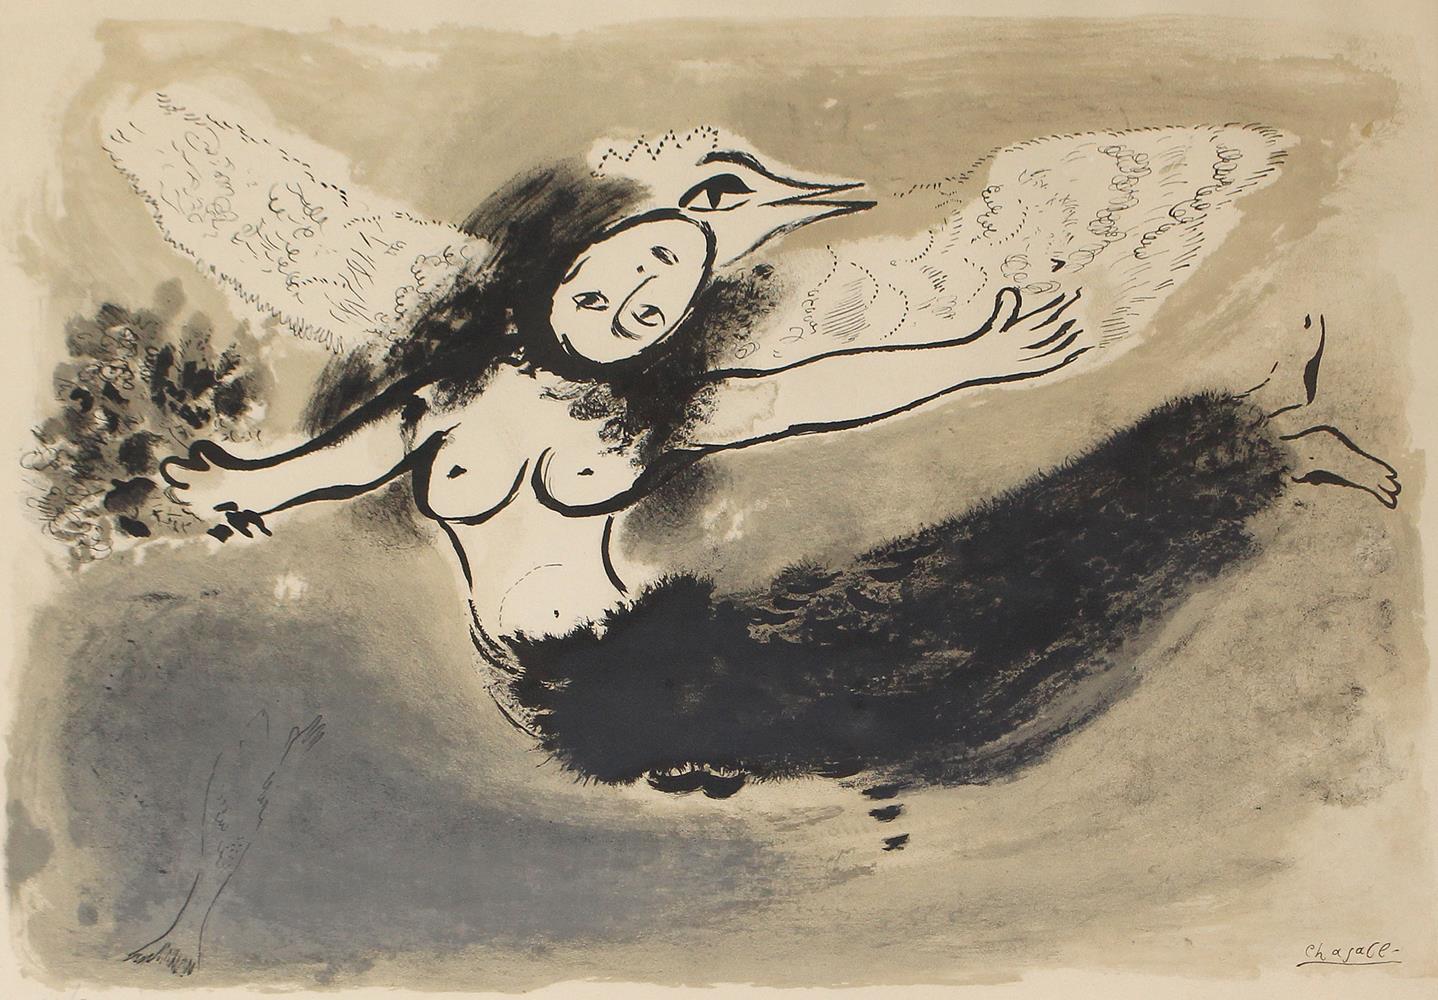 Chagall, Marc | Bild Nr.1